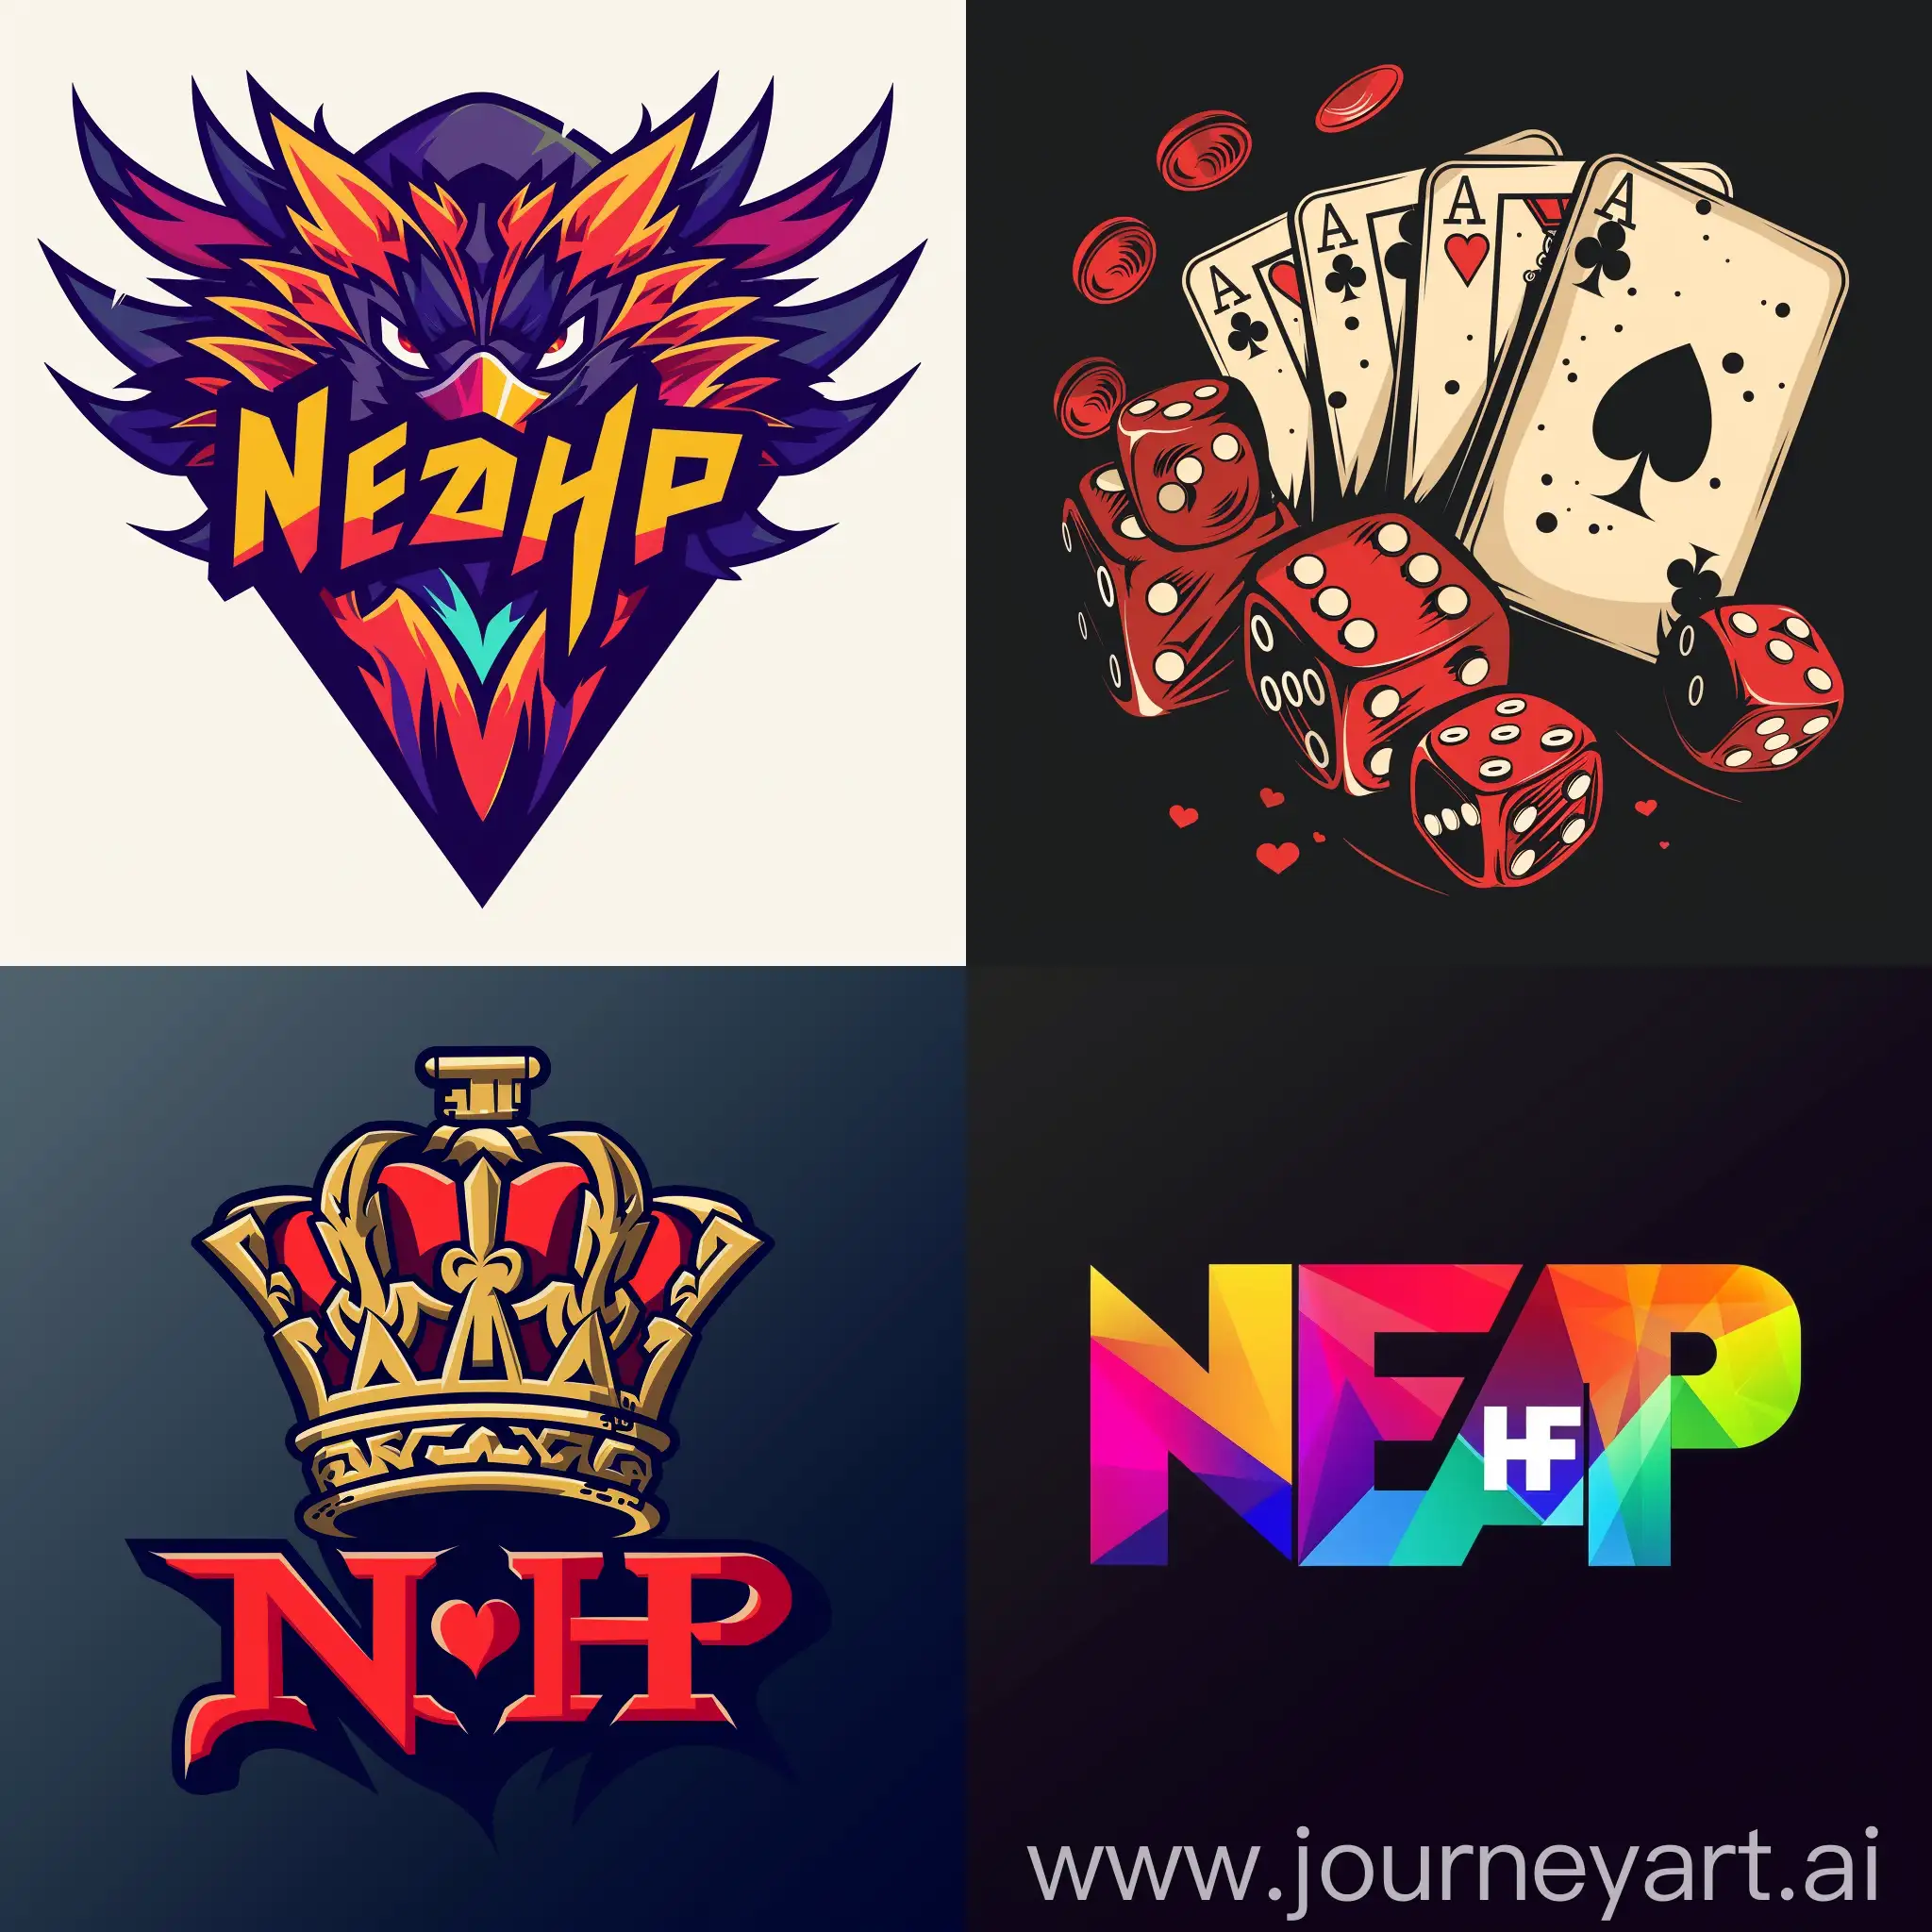 text "NezaHF" like a cool funny gambling logo